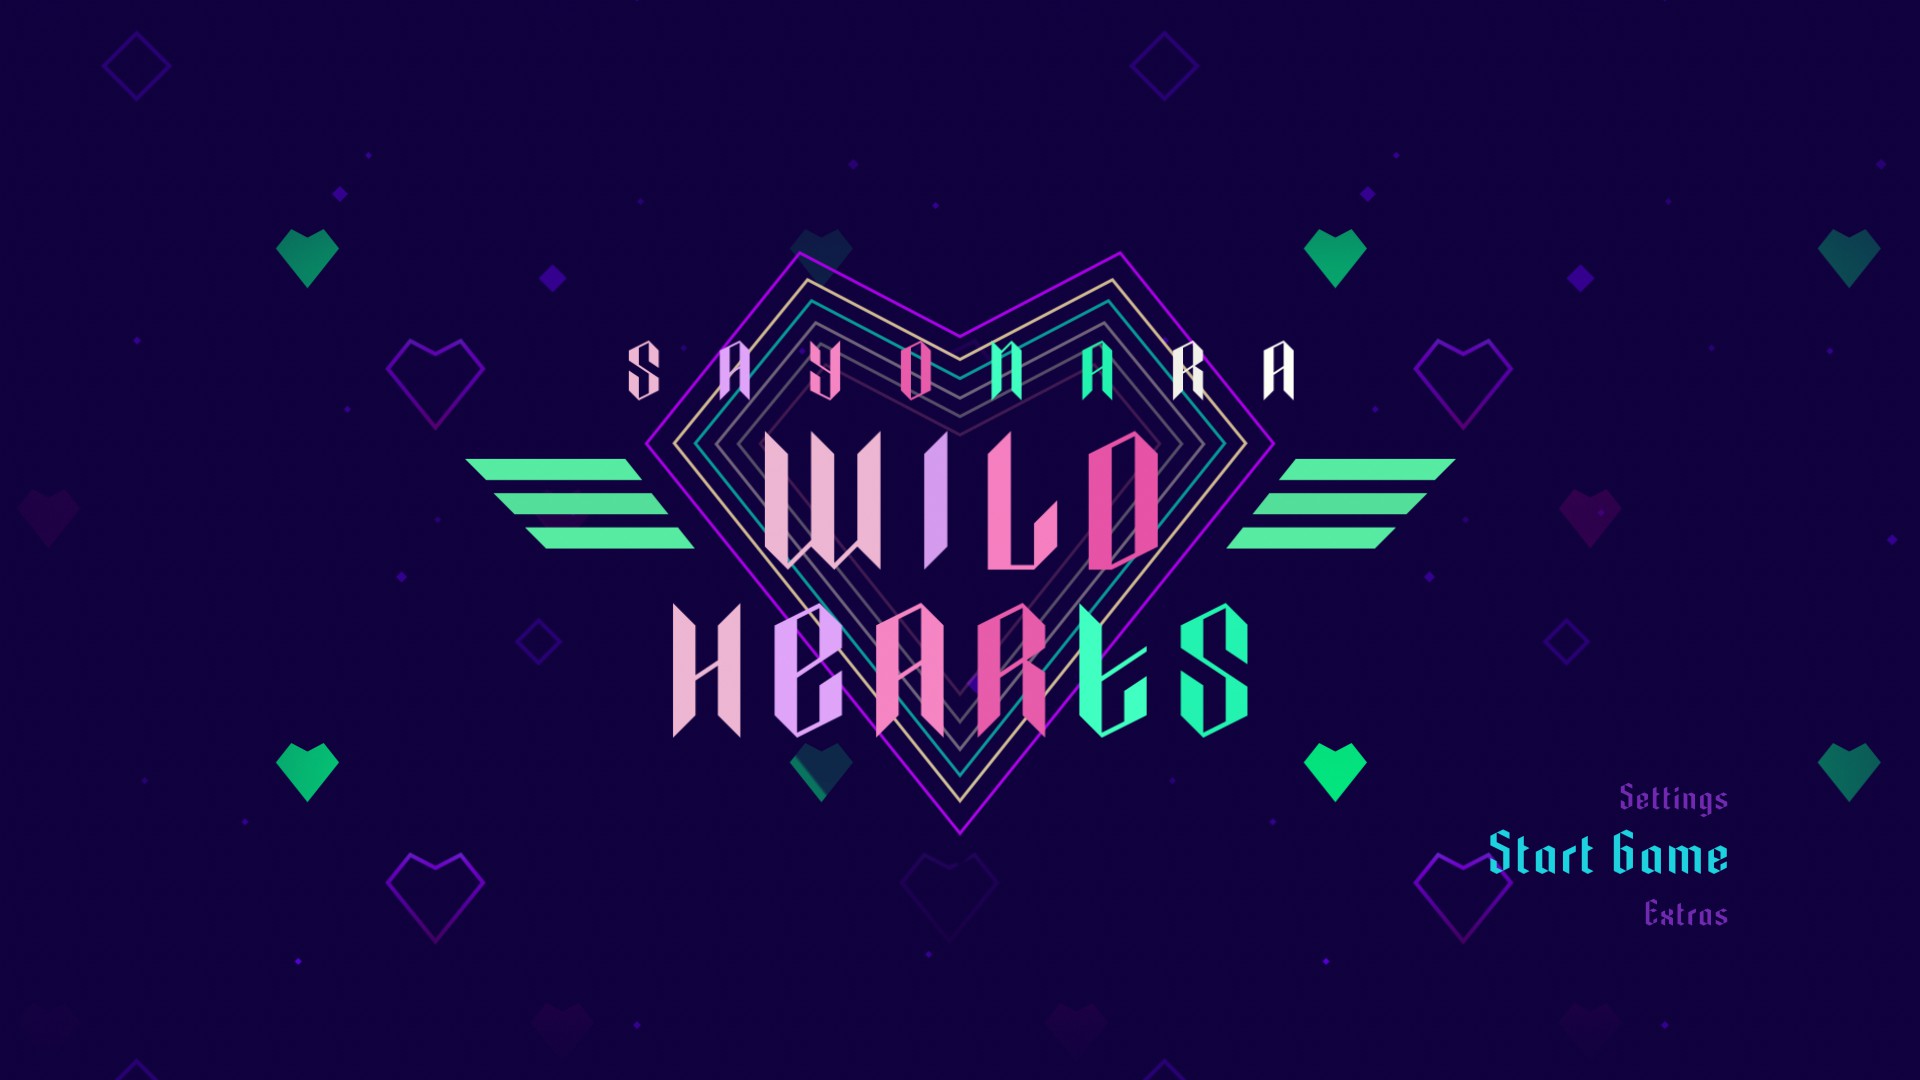 Arcade review: Sayonara Wild Hearts